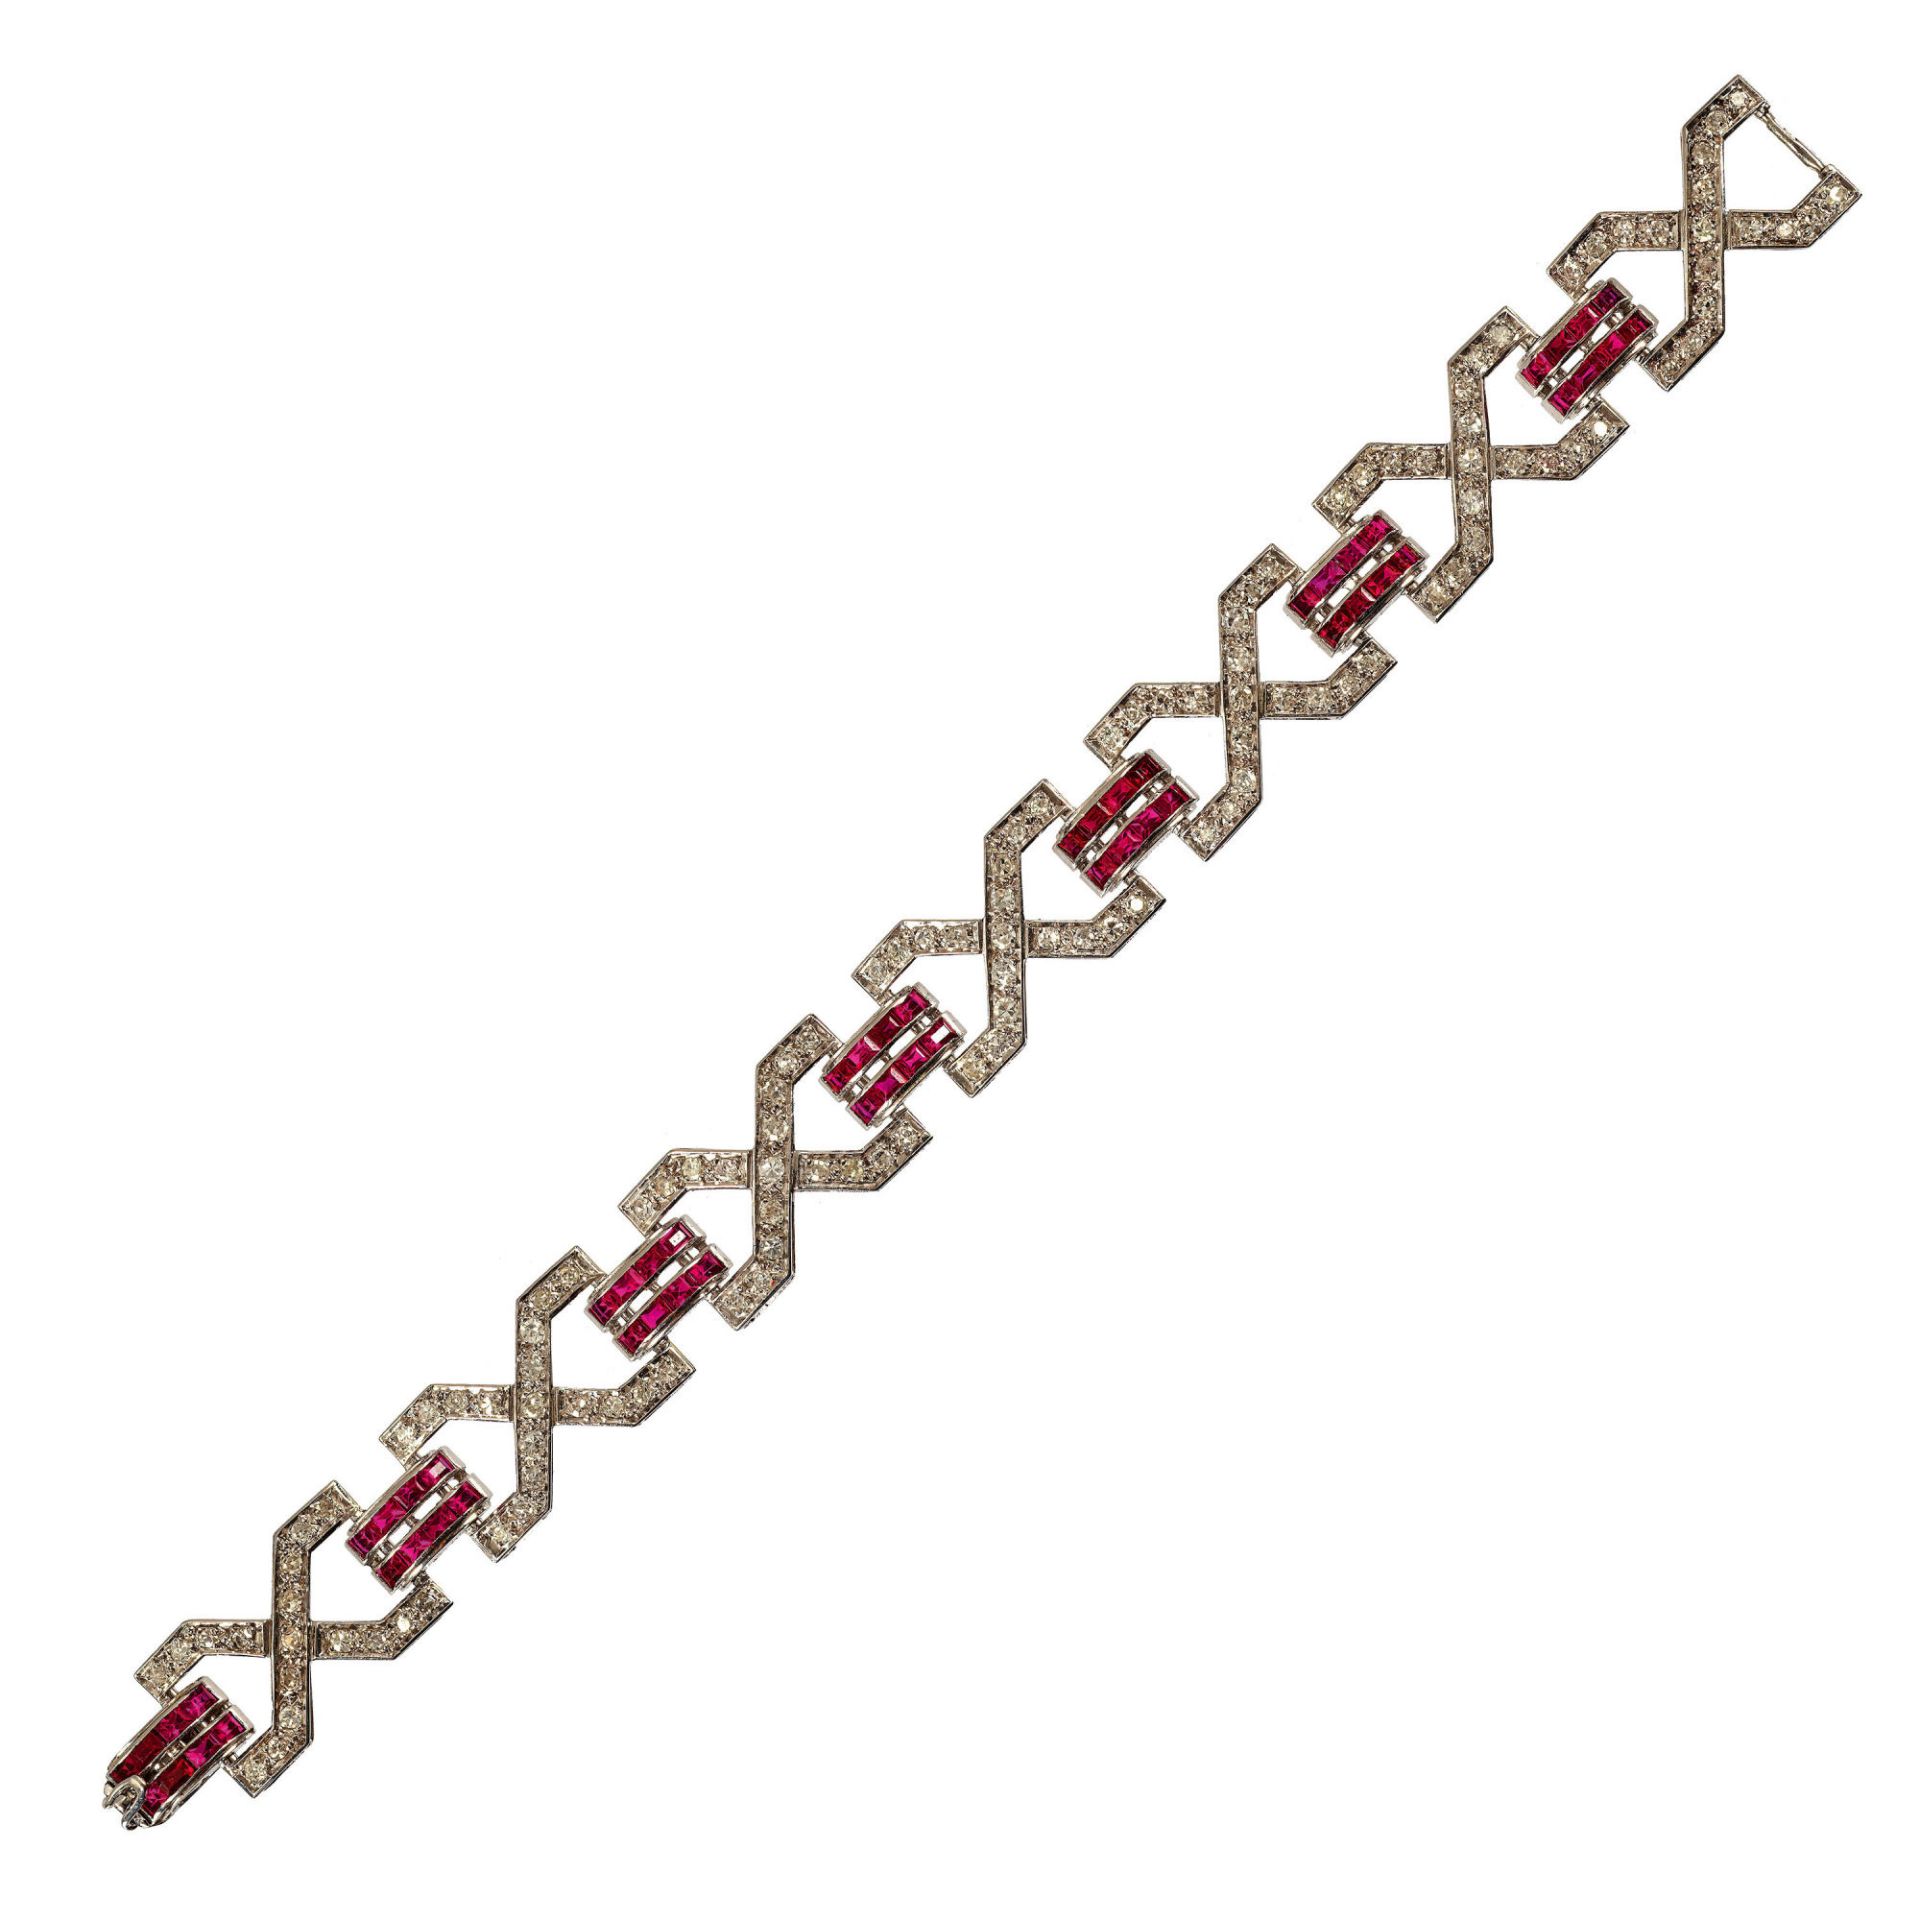 RUBIN-BRILLANT-BRACELET / Ruby-diamond-bracelet 